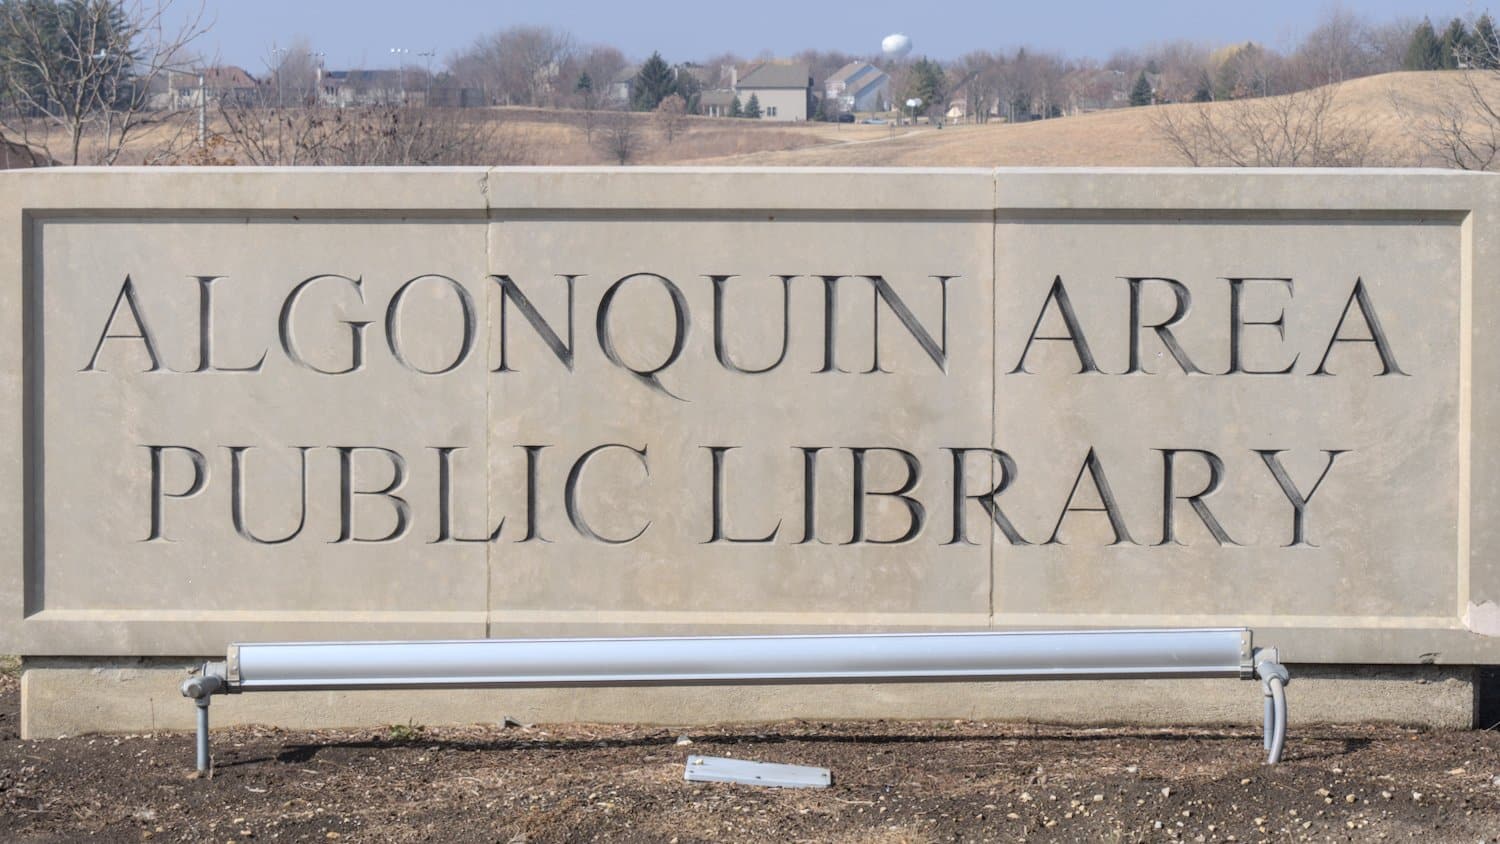 Algonquin Area Public Library sign.